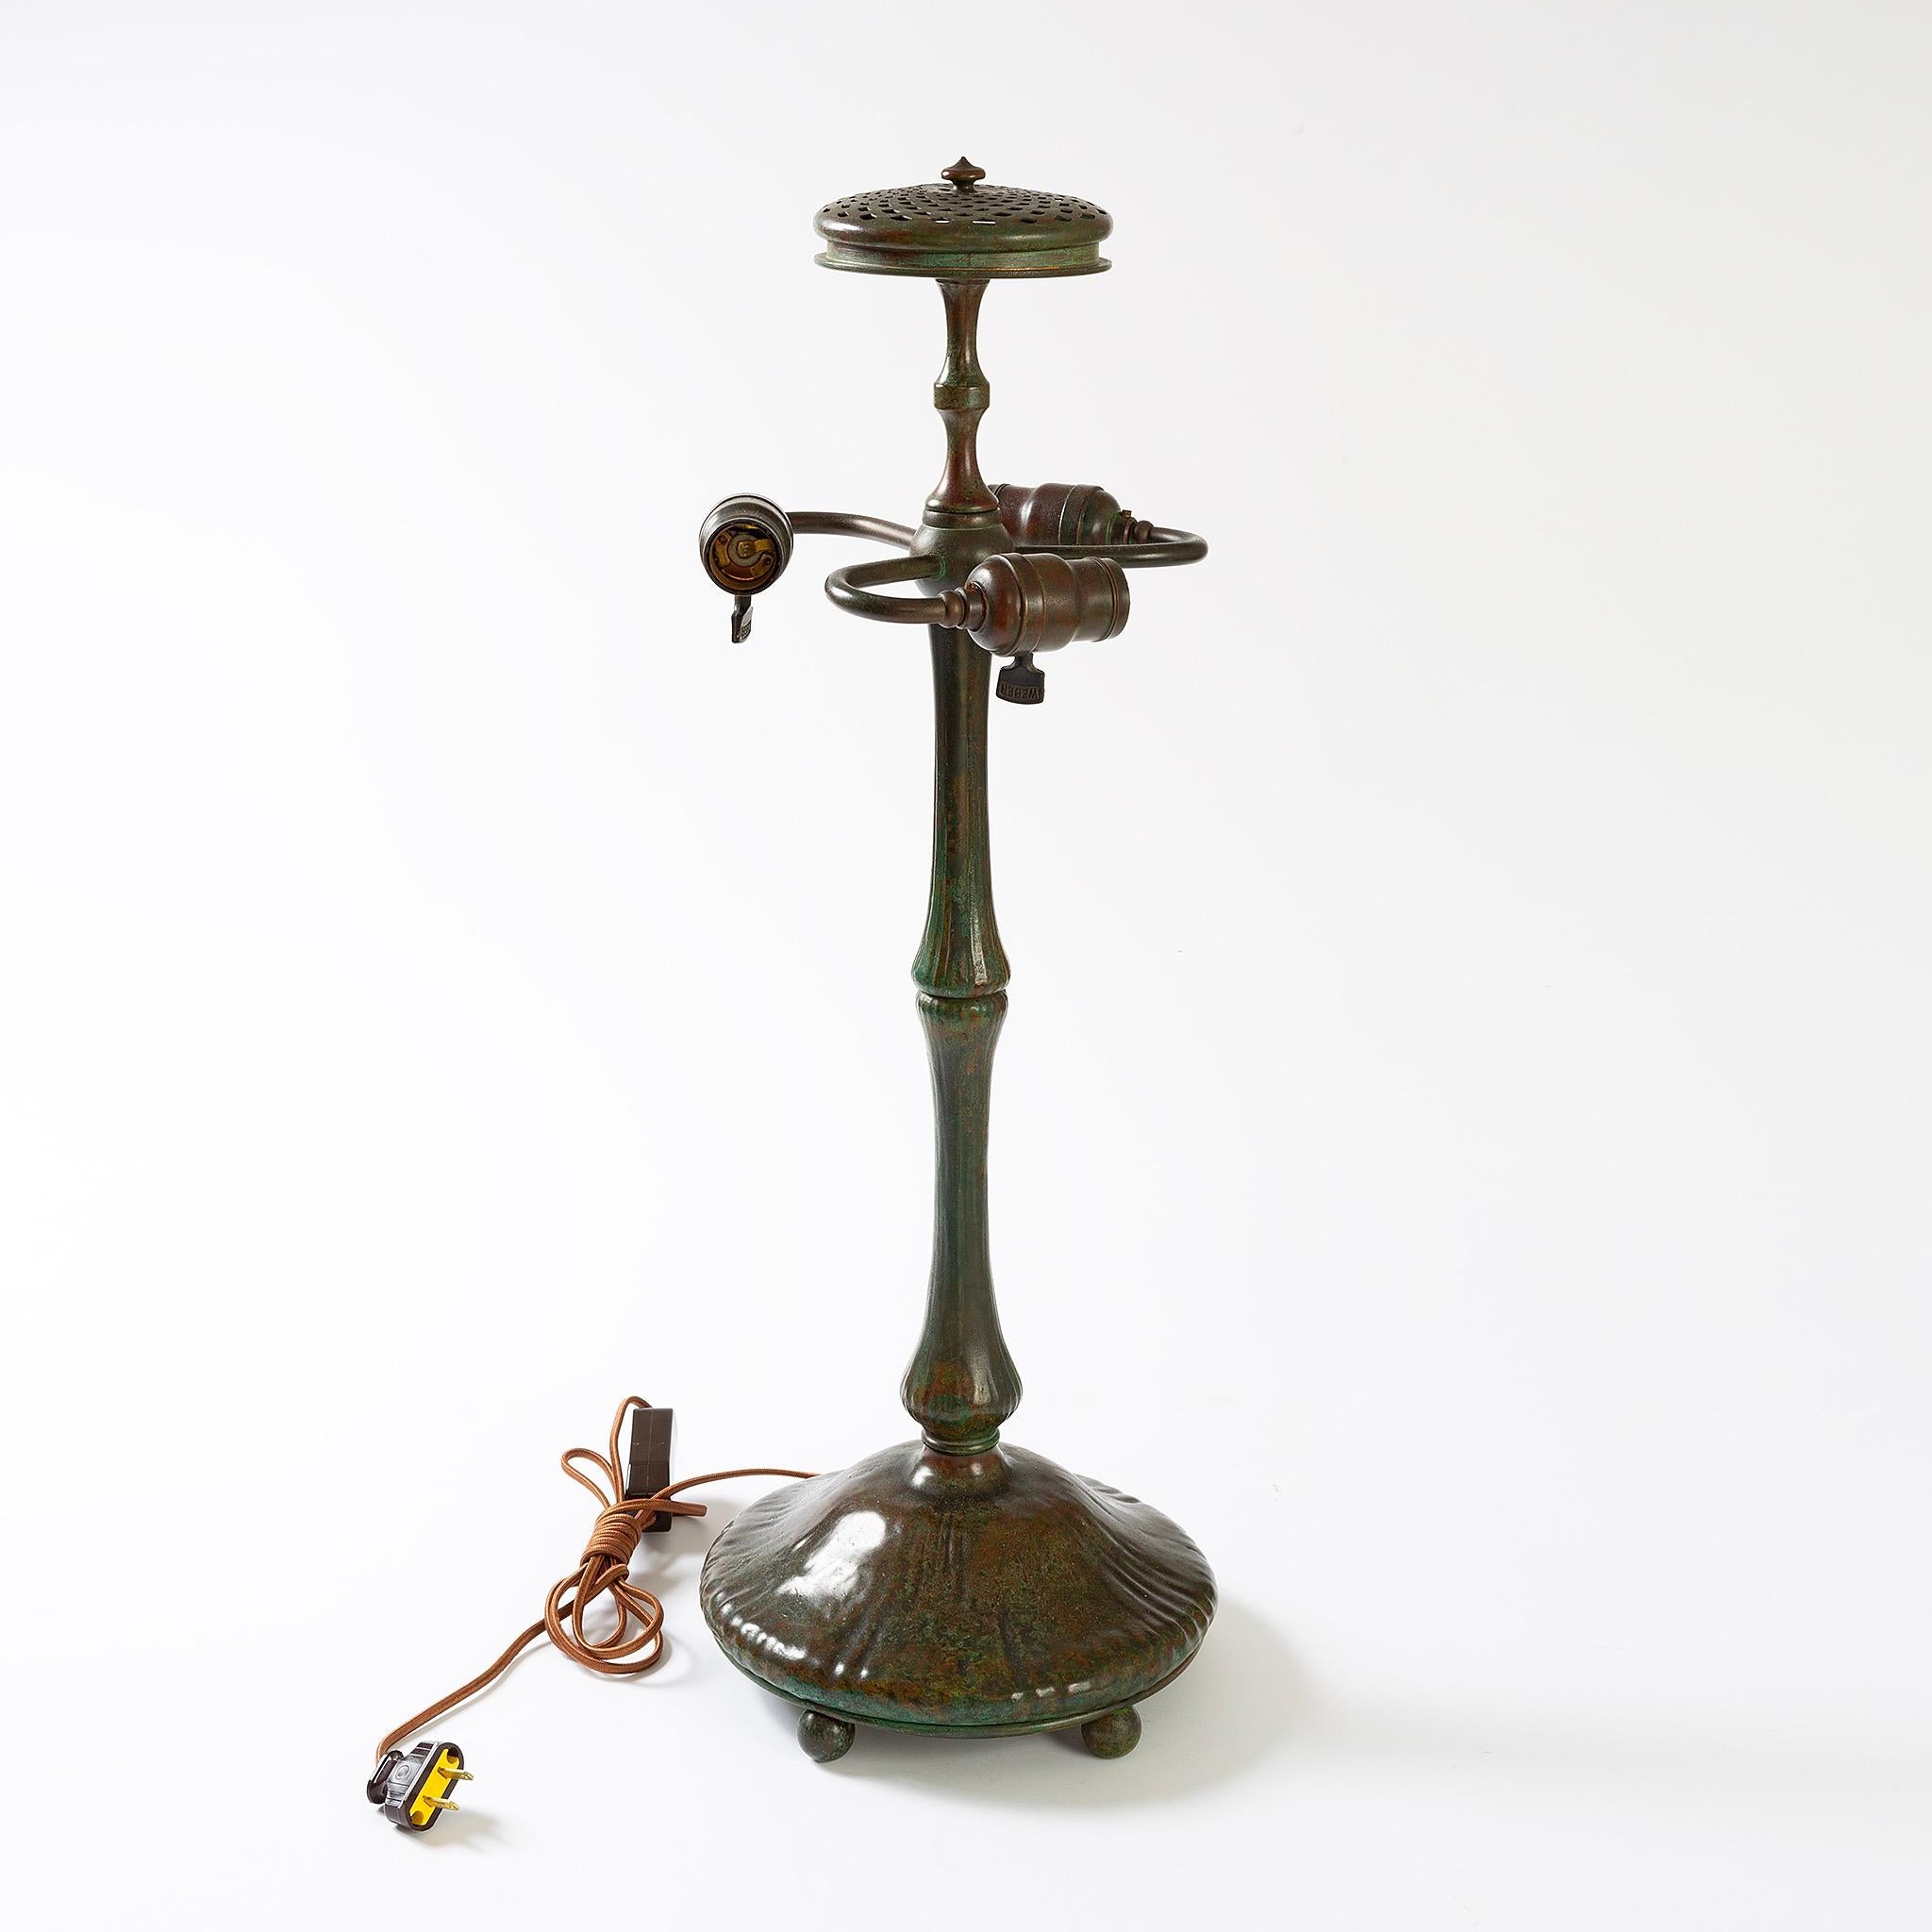 American Tiffany Studios New York “Dragonfly” Table Lamp